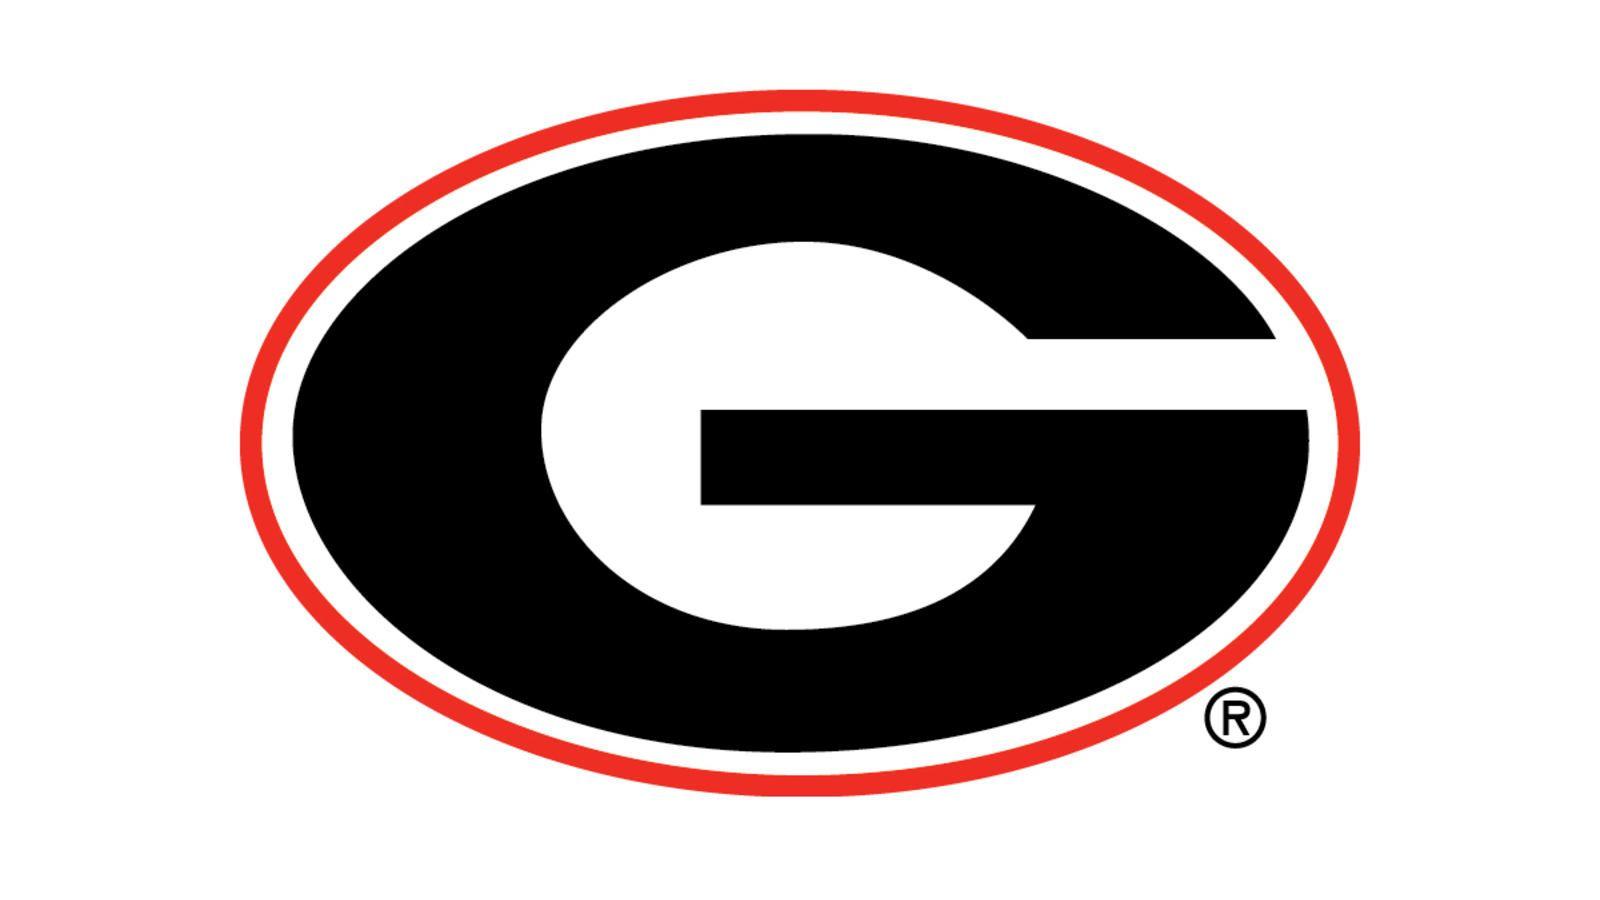 Georgia Logo - Georgia Athletics Introduces New Brand Identity System - Nike News